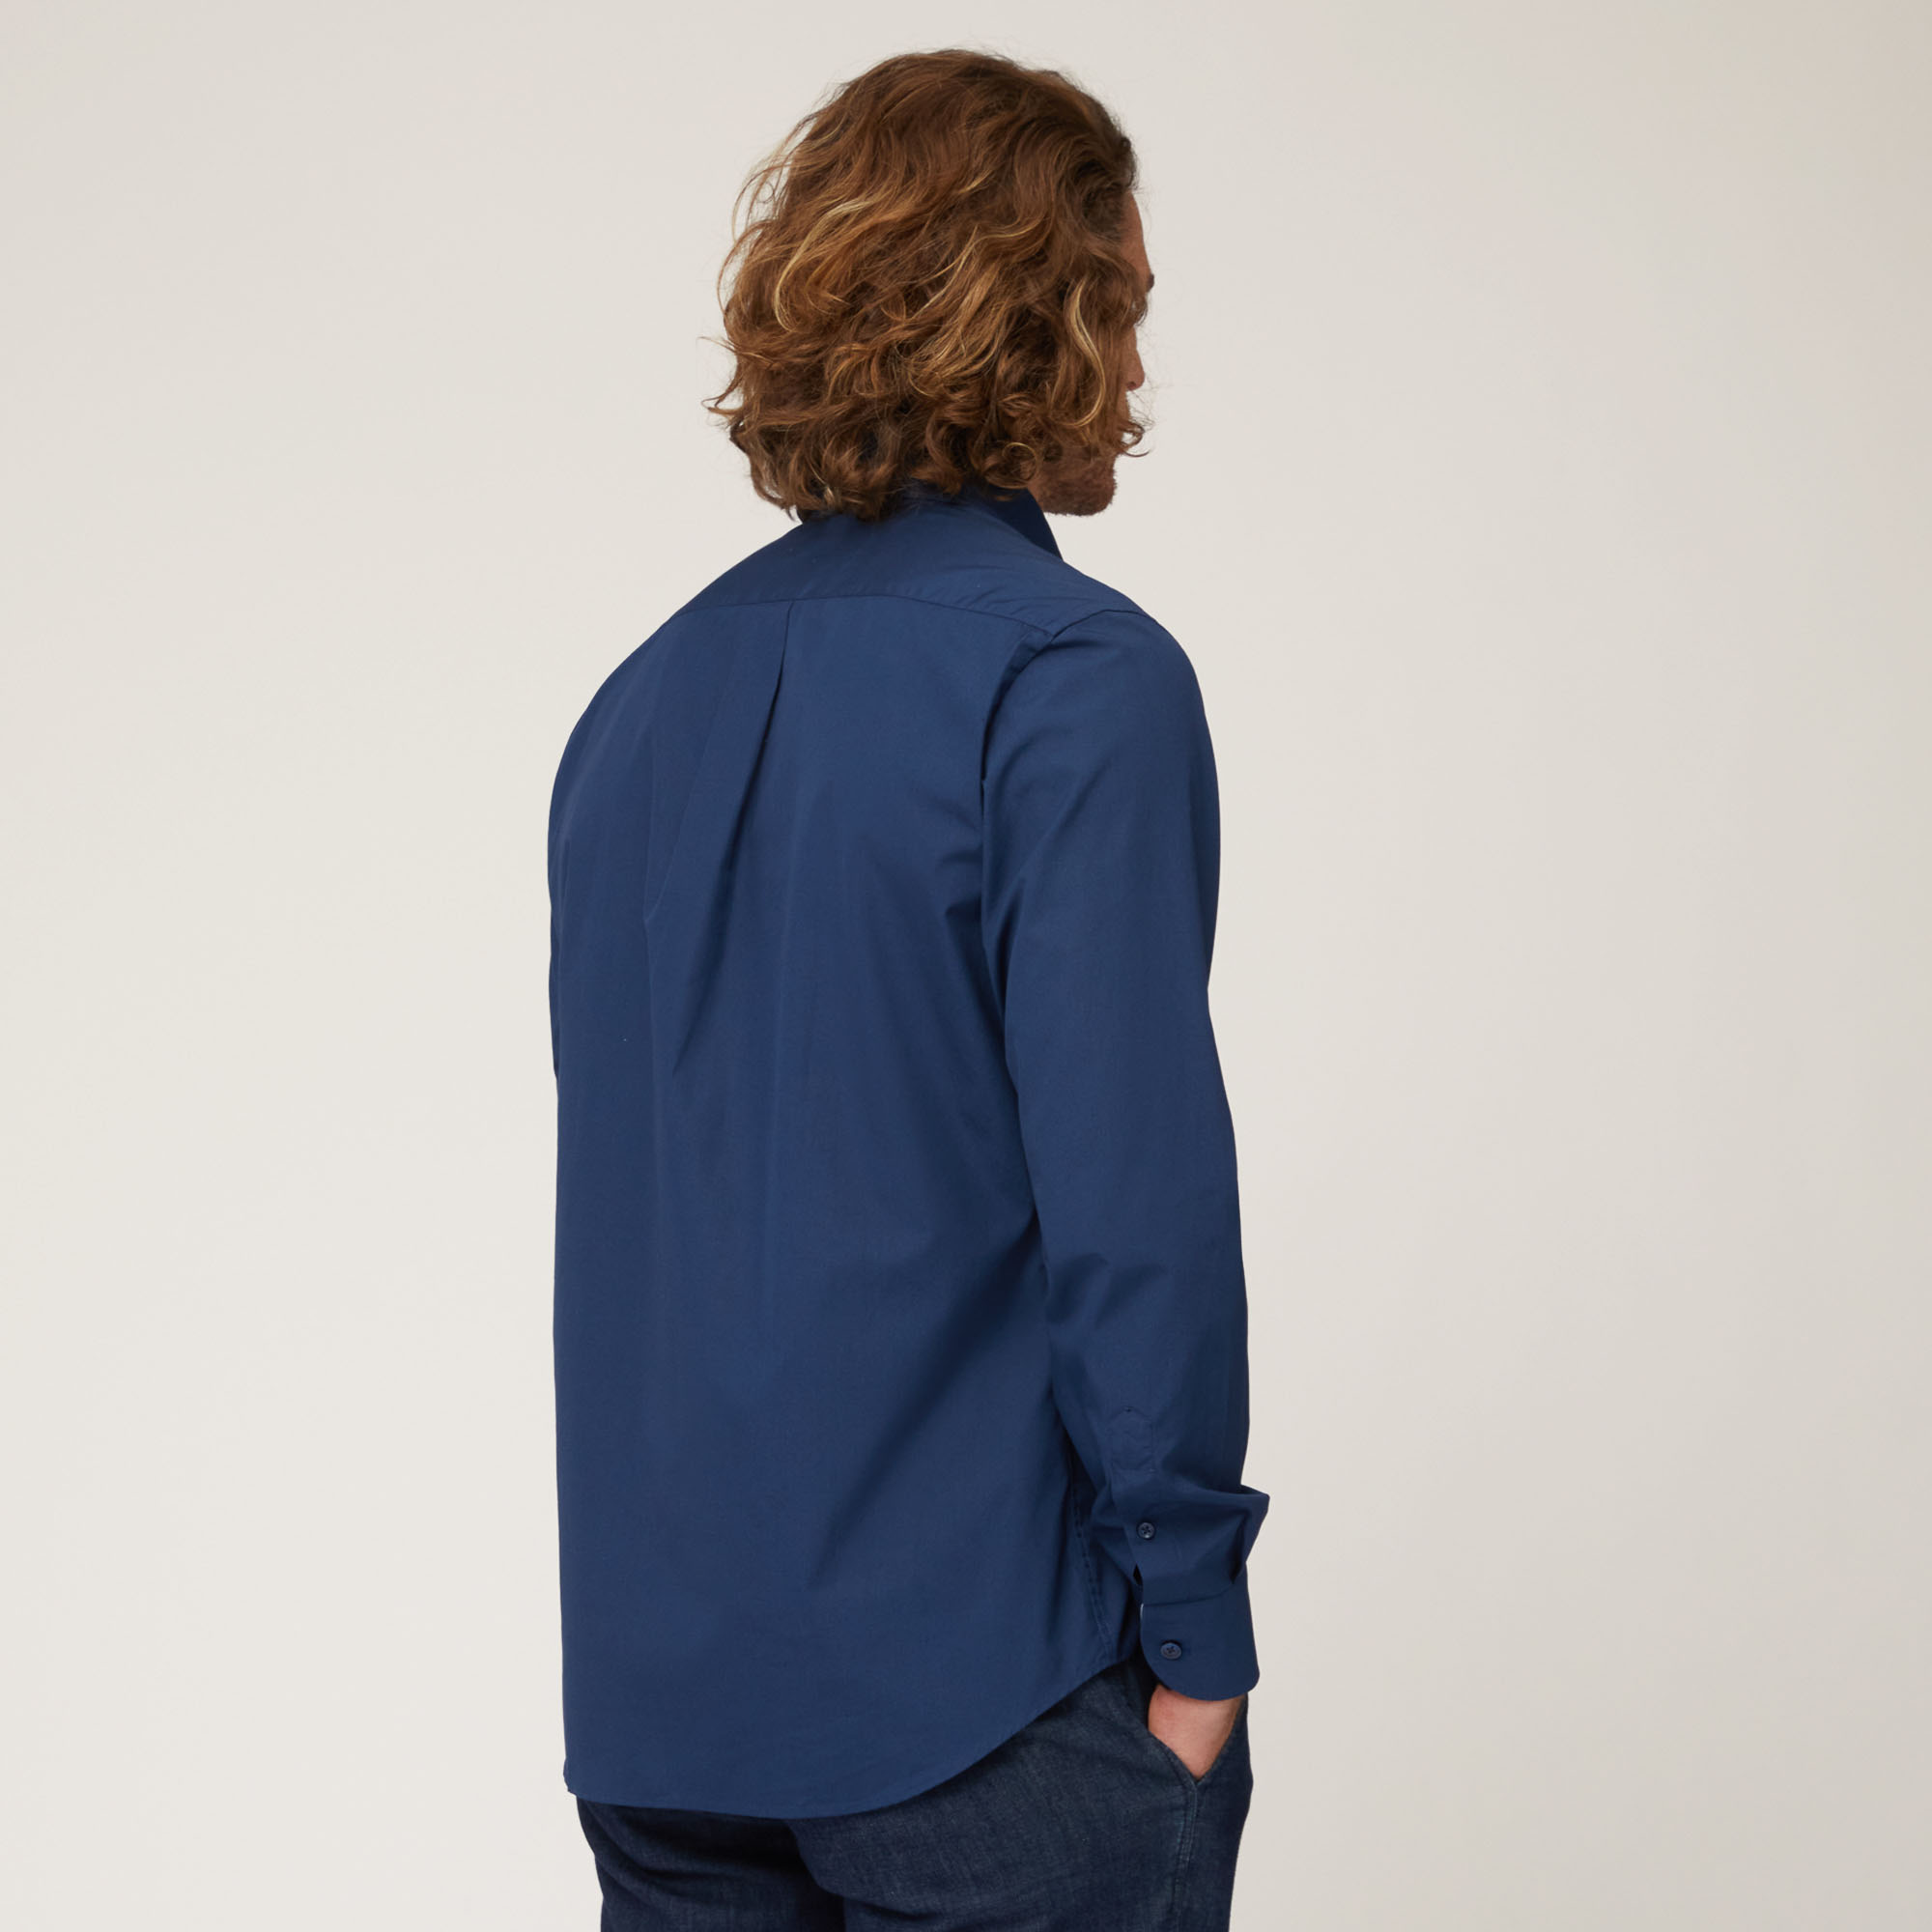 Cotton Shirt with Breast Pocket, Light Blue, large image number 1